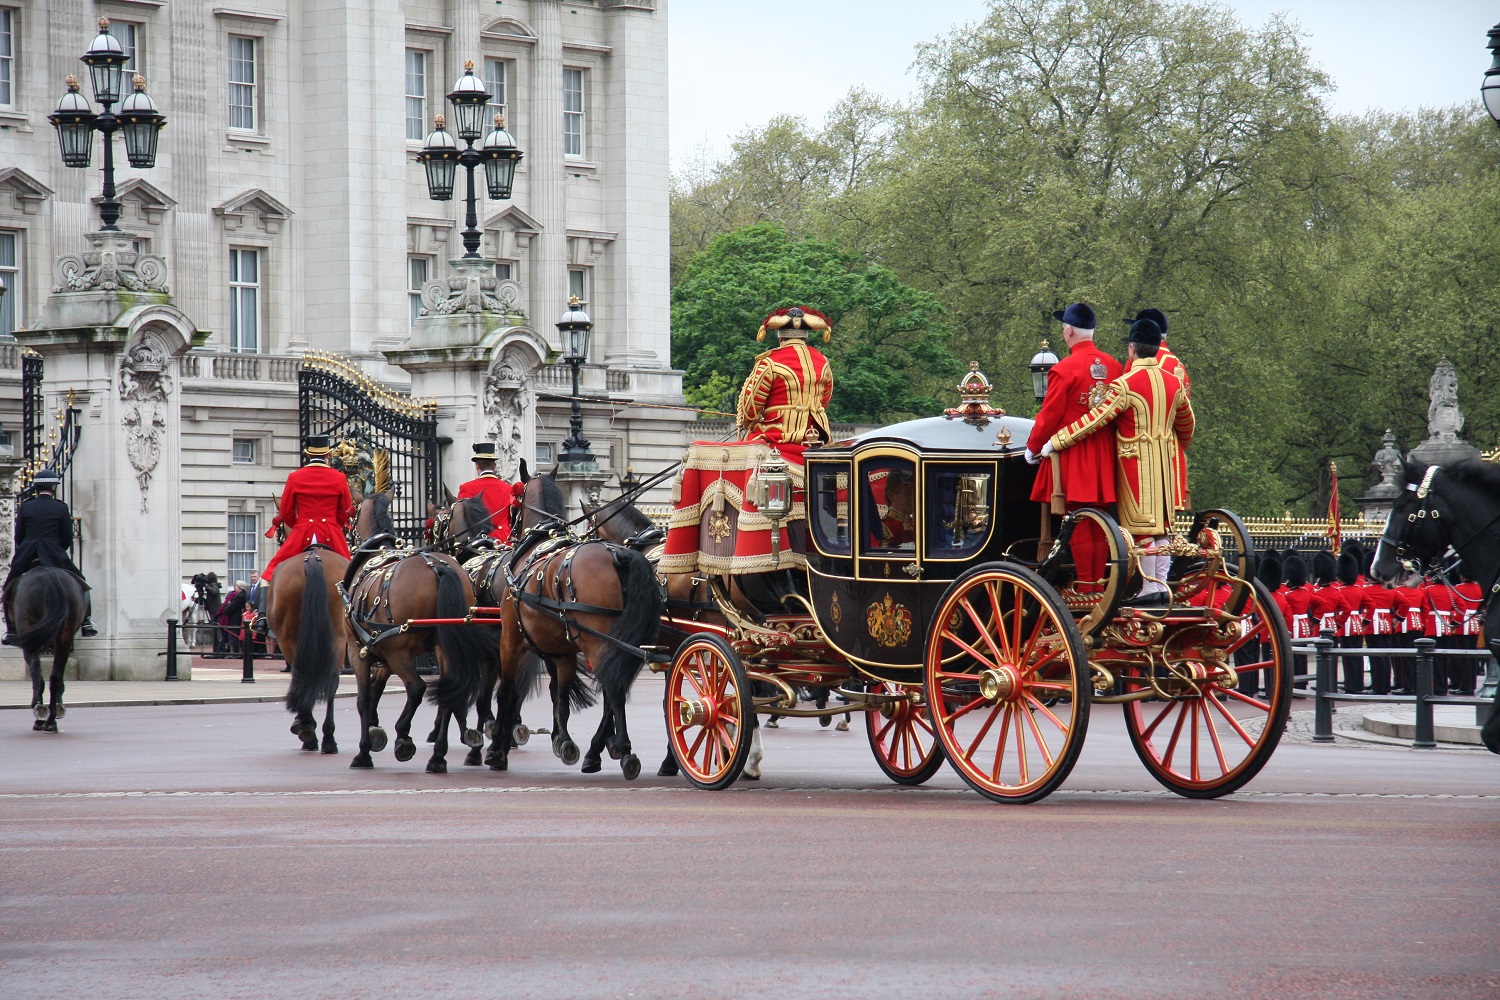 Buckingham Palace Royal London walk